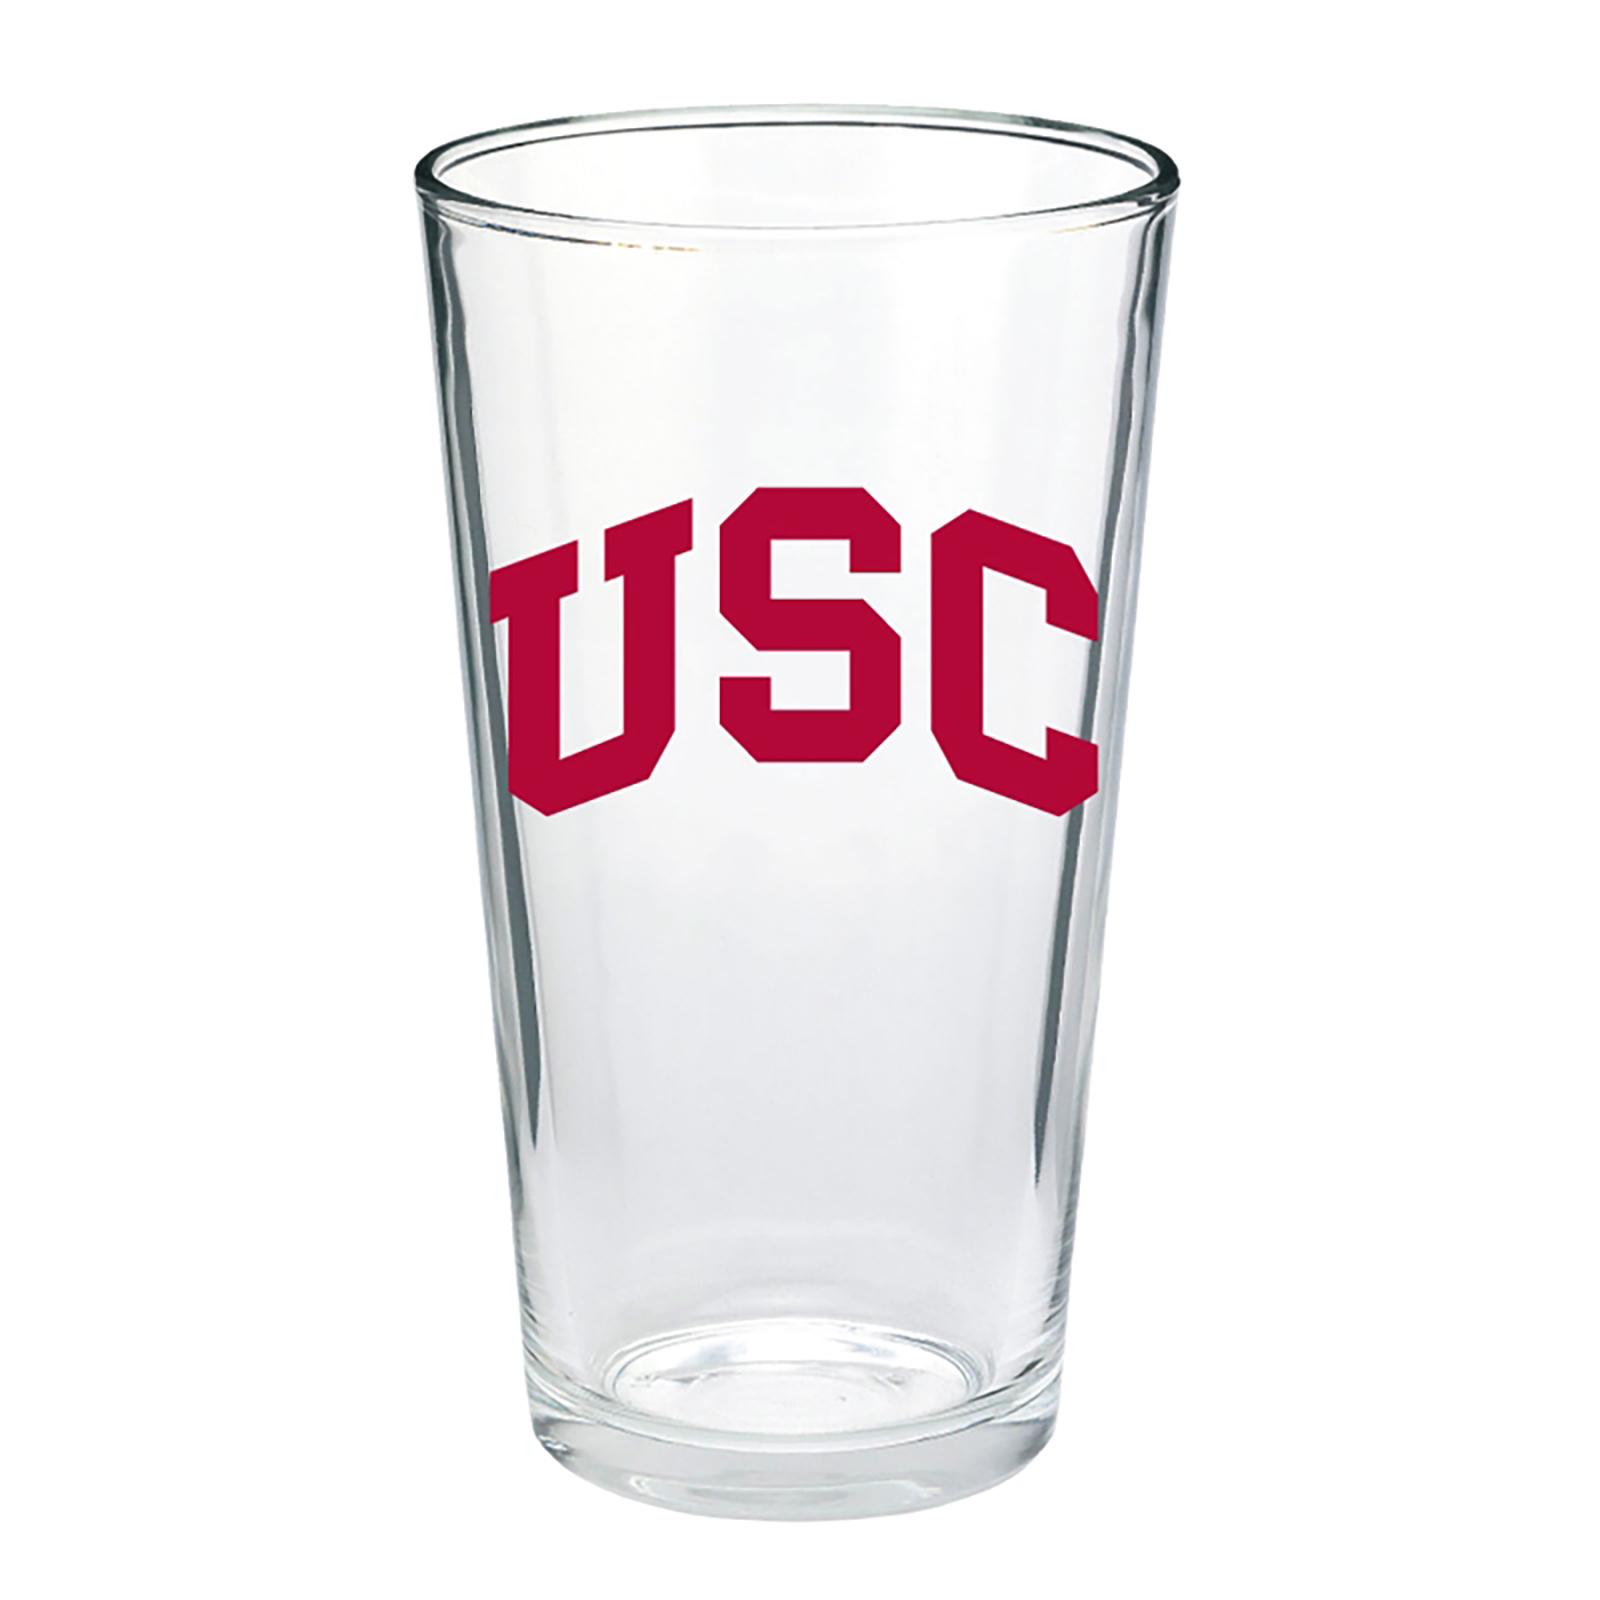 USC Arch Pint Glass 16oz image01